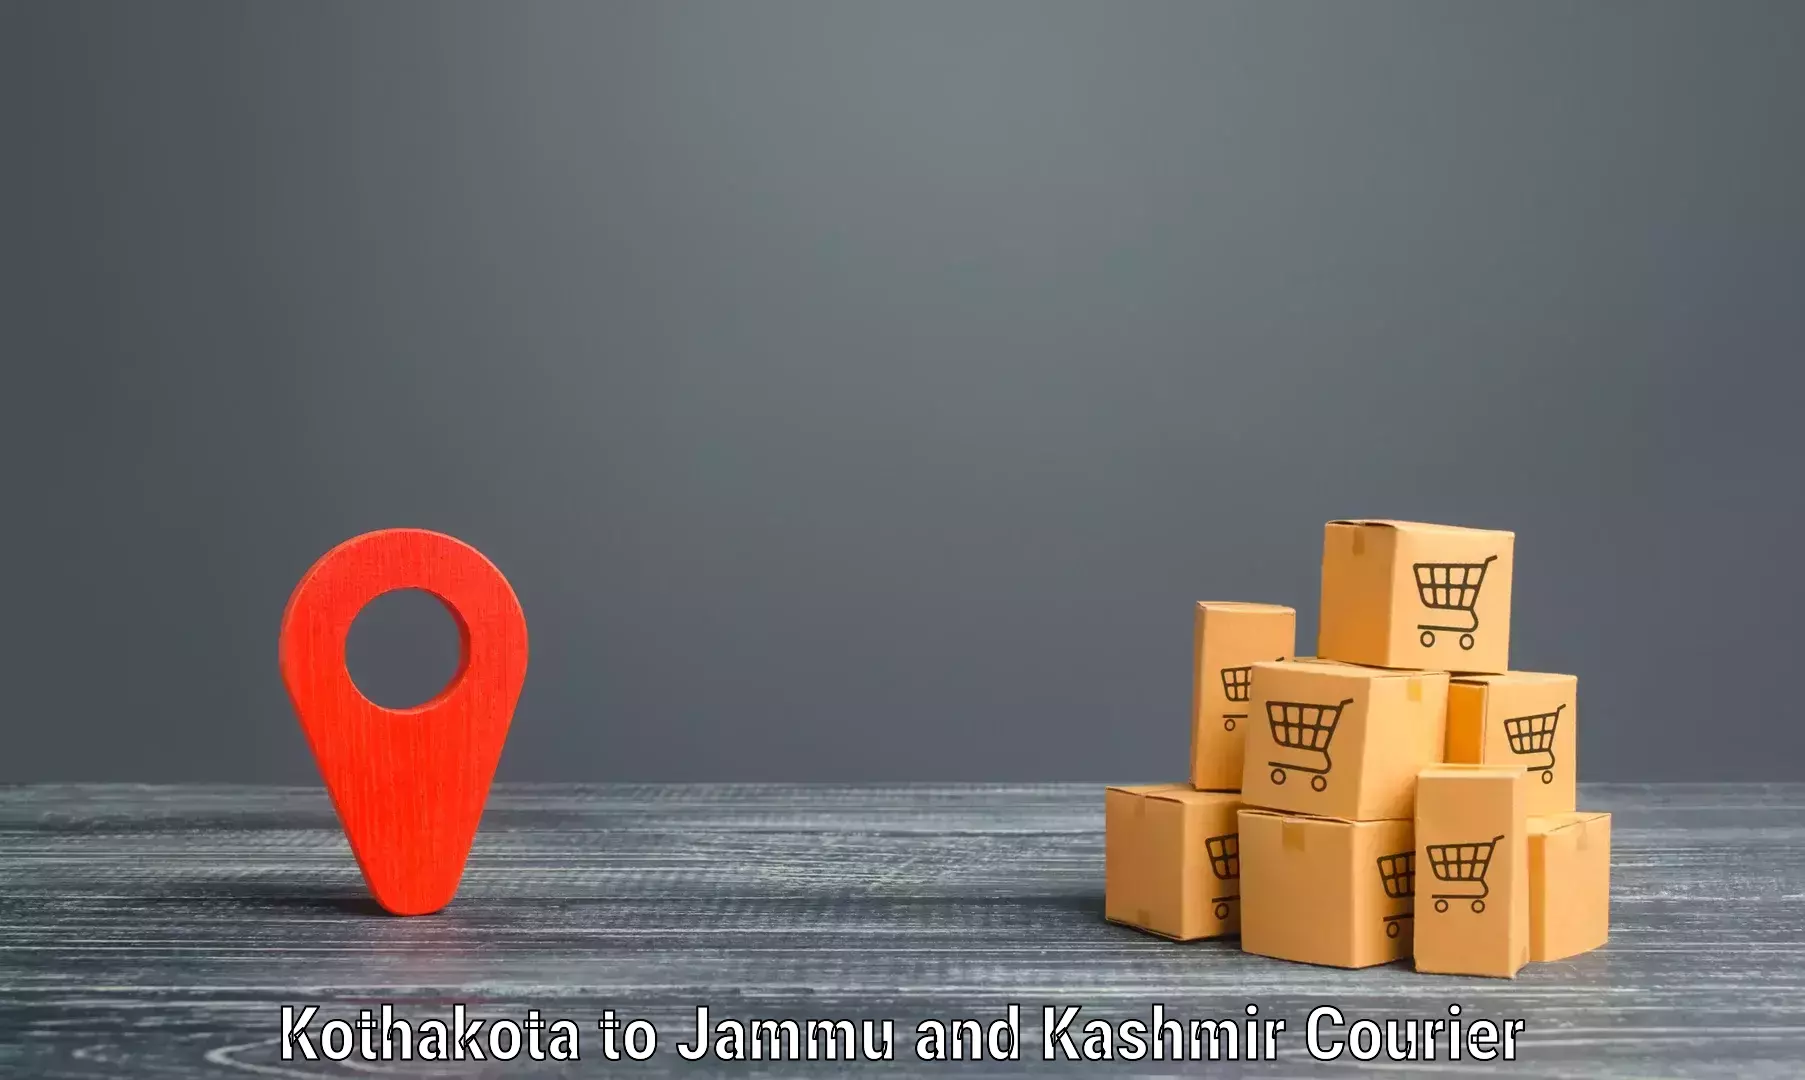 Express mail service Kothakota to Srinagar Kashmir